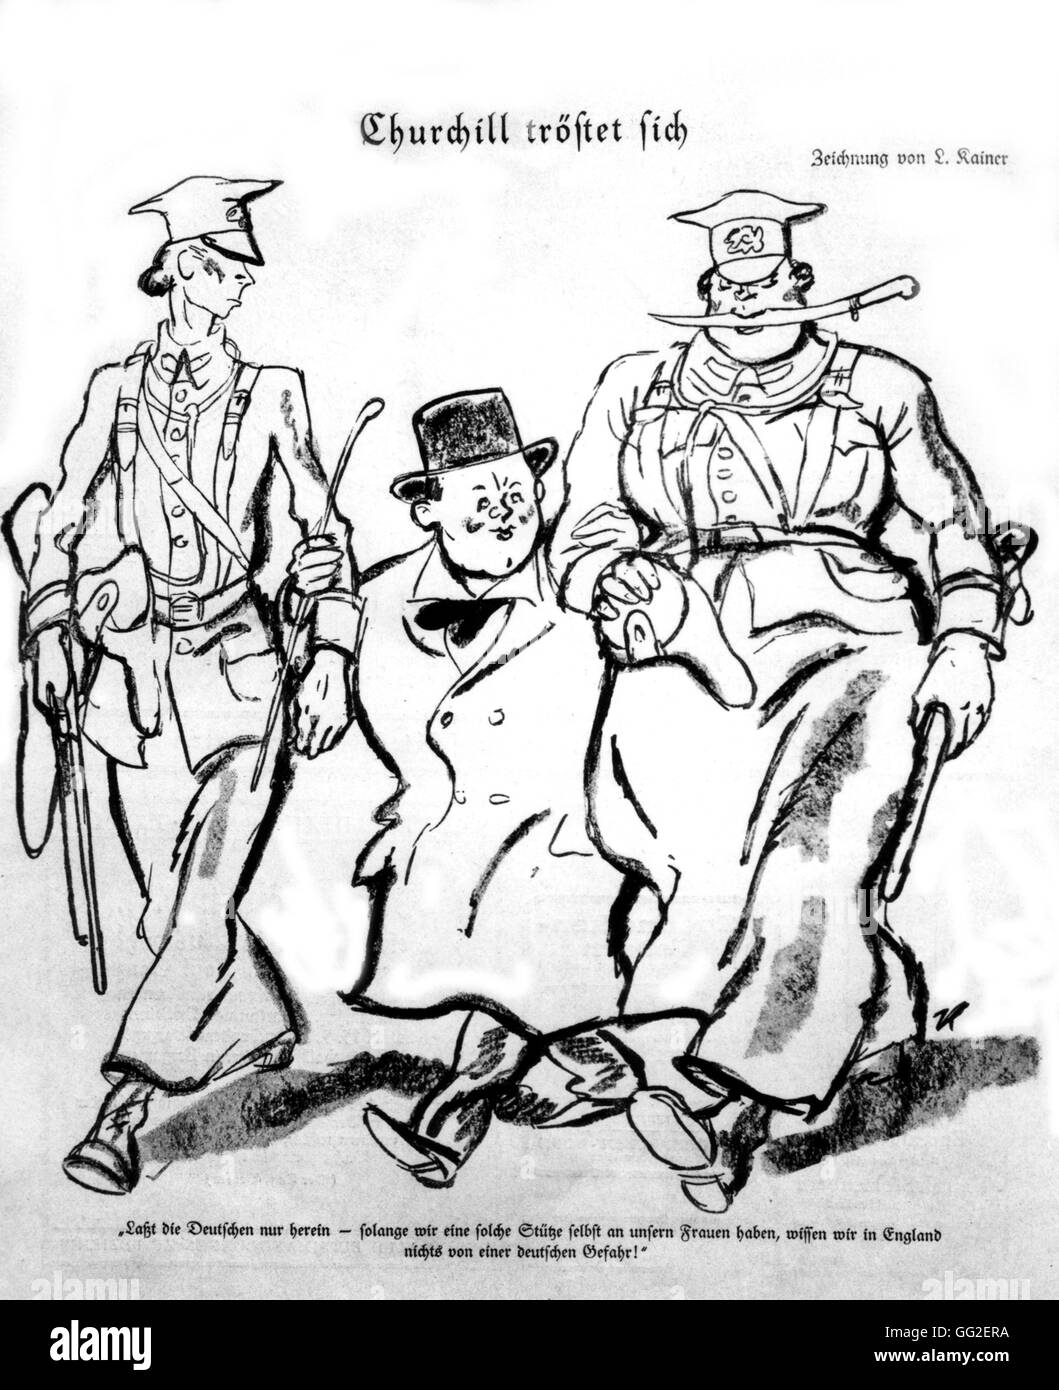 German satirical cartoon against Churchill 20th century Great Britain BDIC Stock Photo